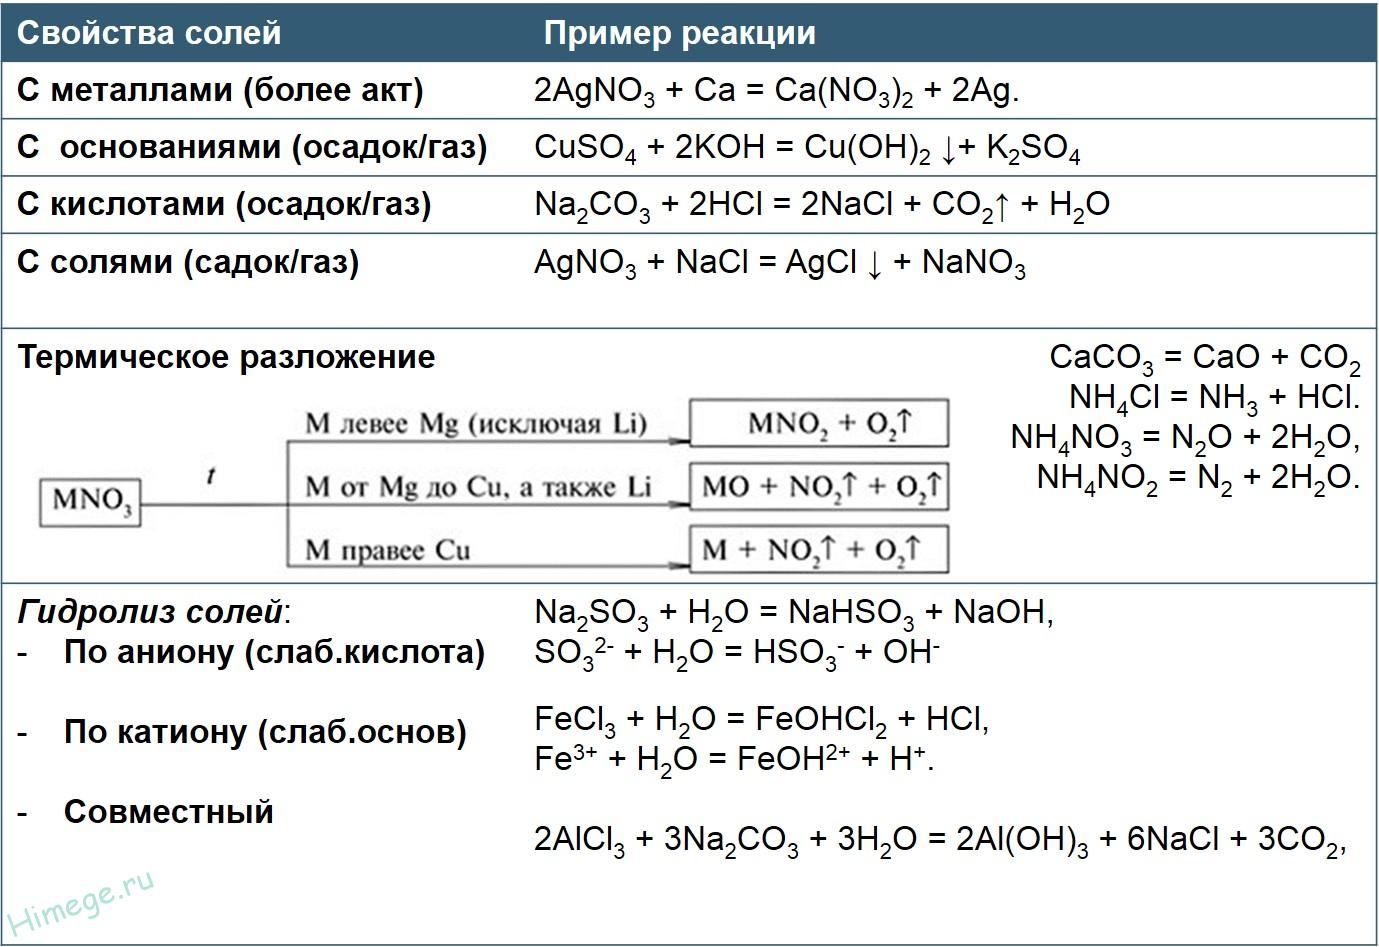 Zn nano3 hcl. Химические свойства солей таблица. Соли химия химические свойства таблица. Общие химические свойства солей таблица. Химические свойства солей примеры реакций.